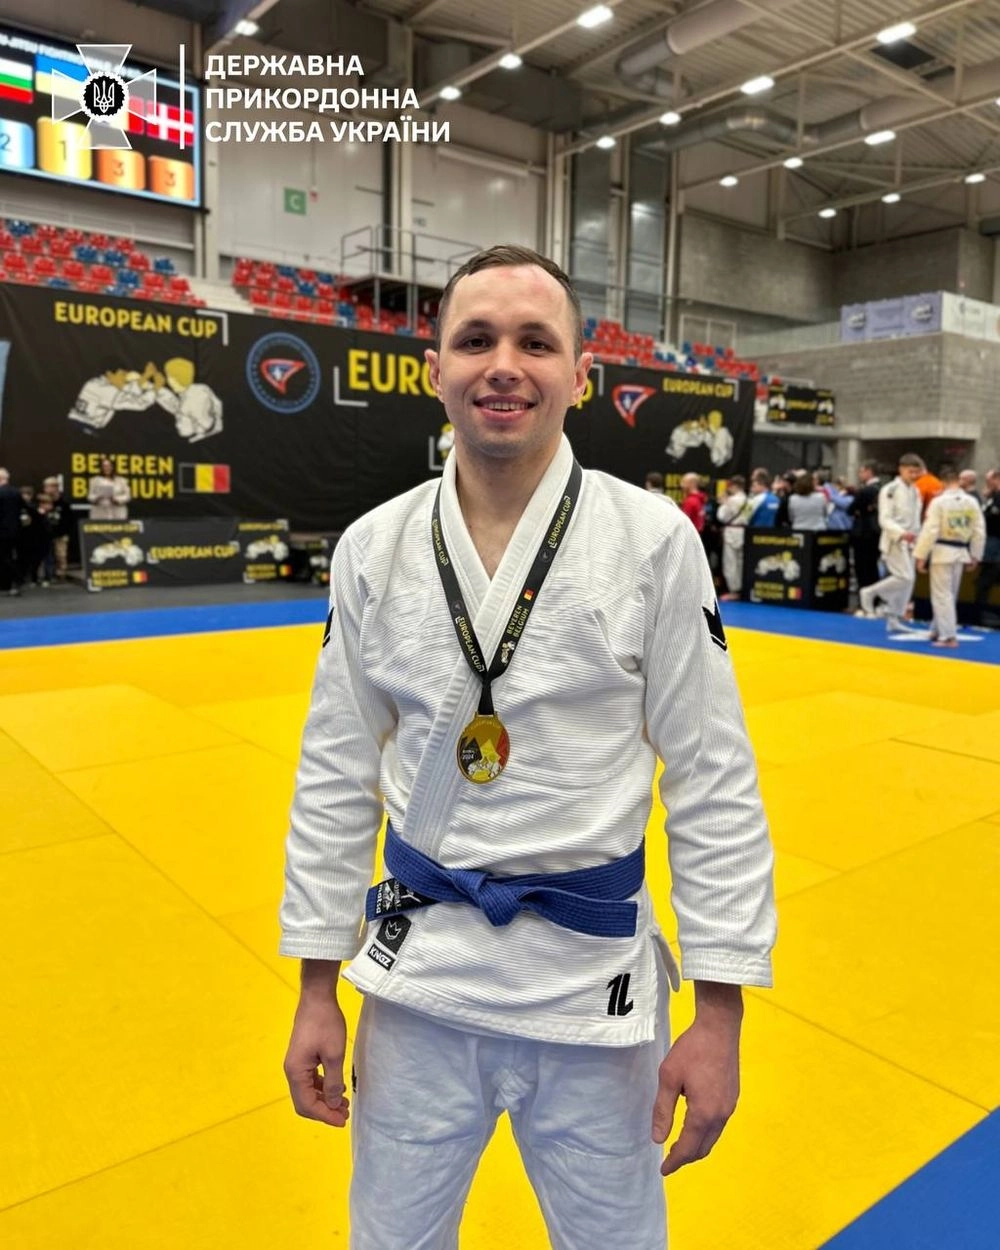 Border guard wins gold at European Jiu-Jitsu Championship